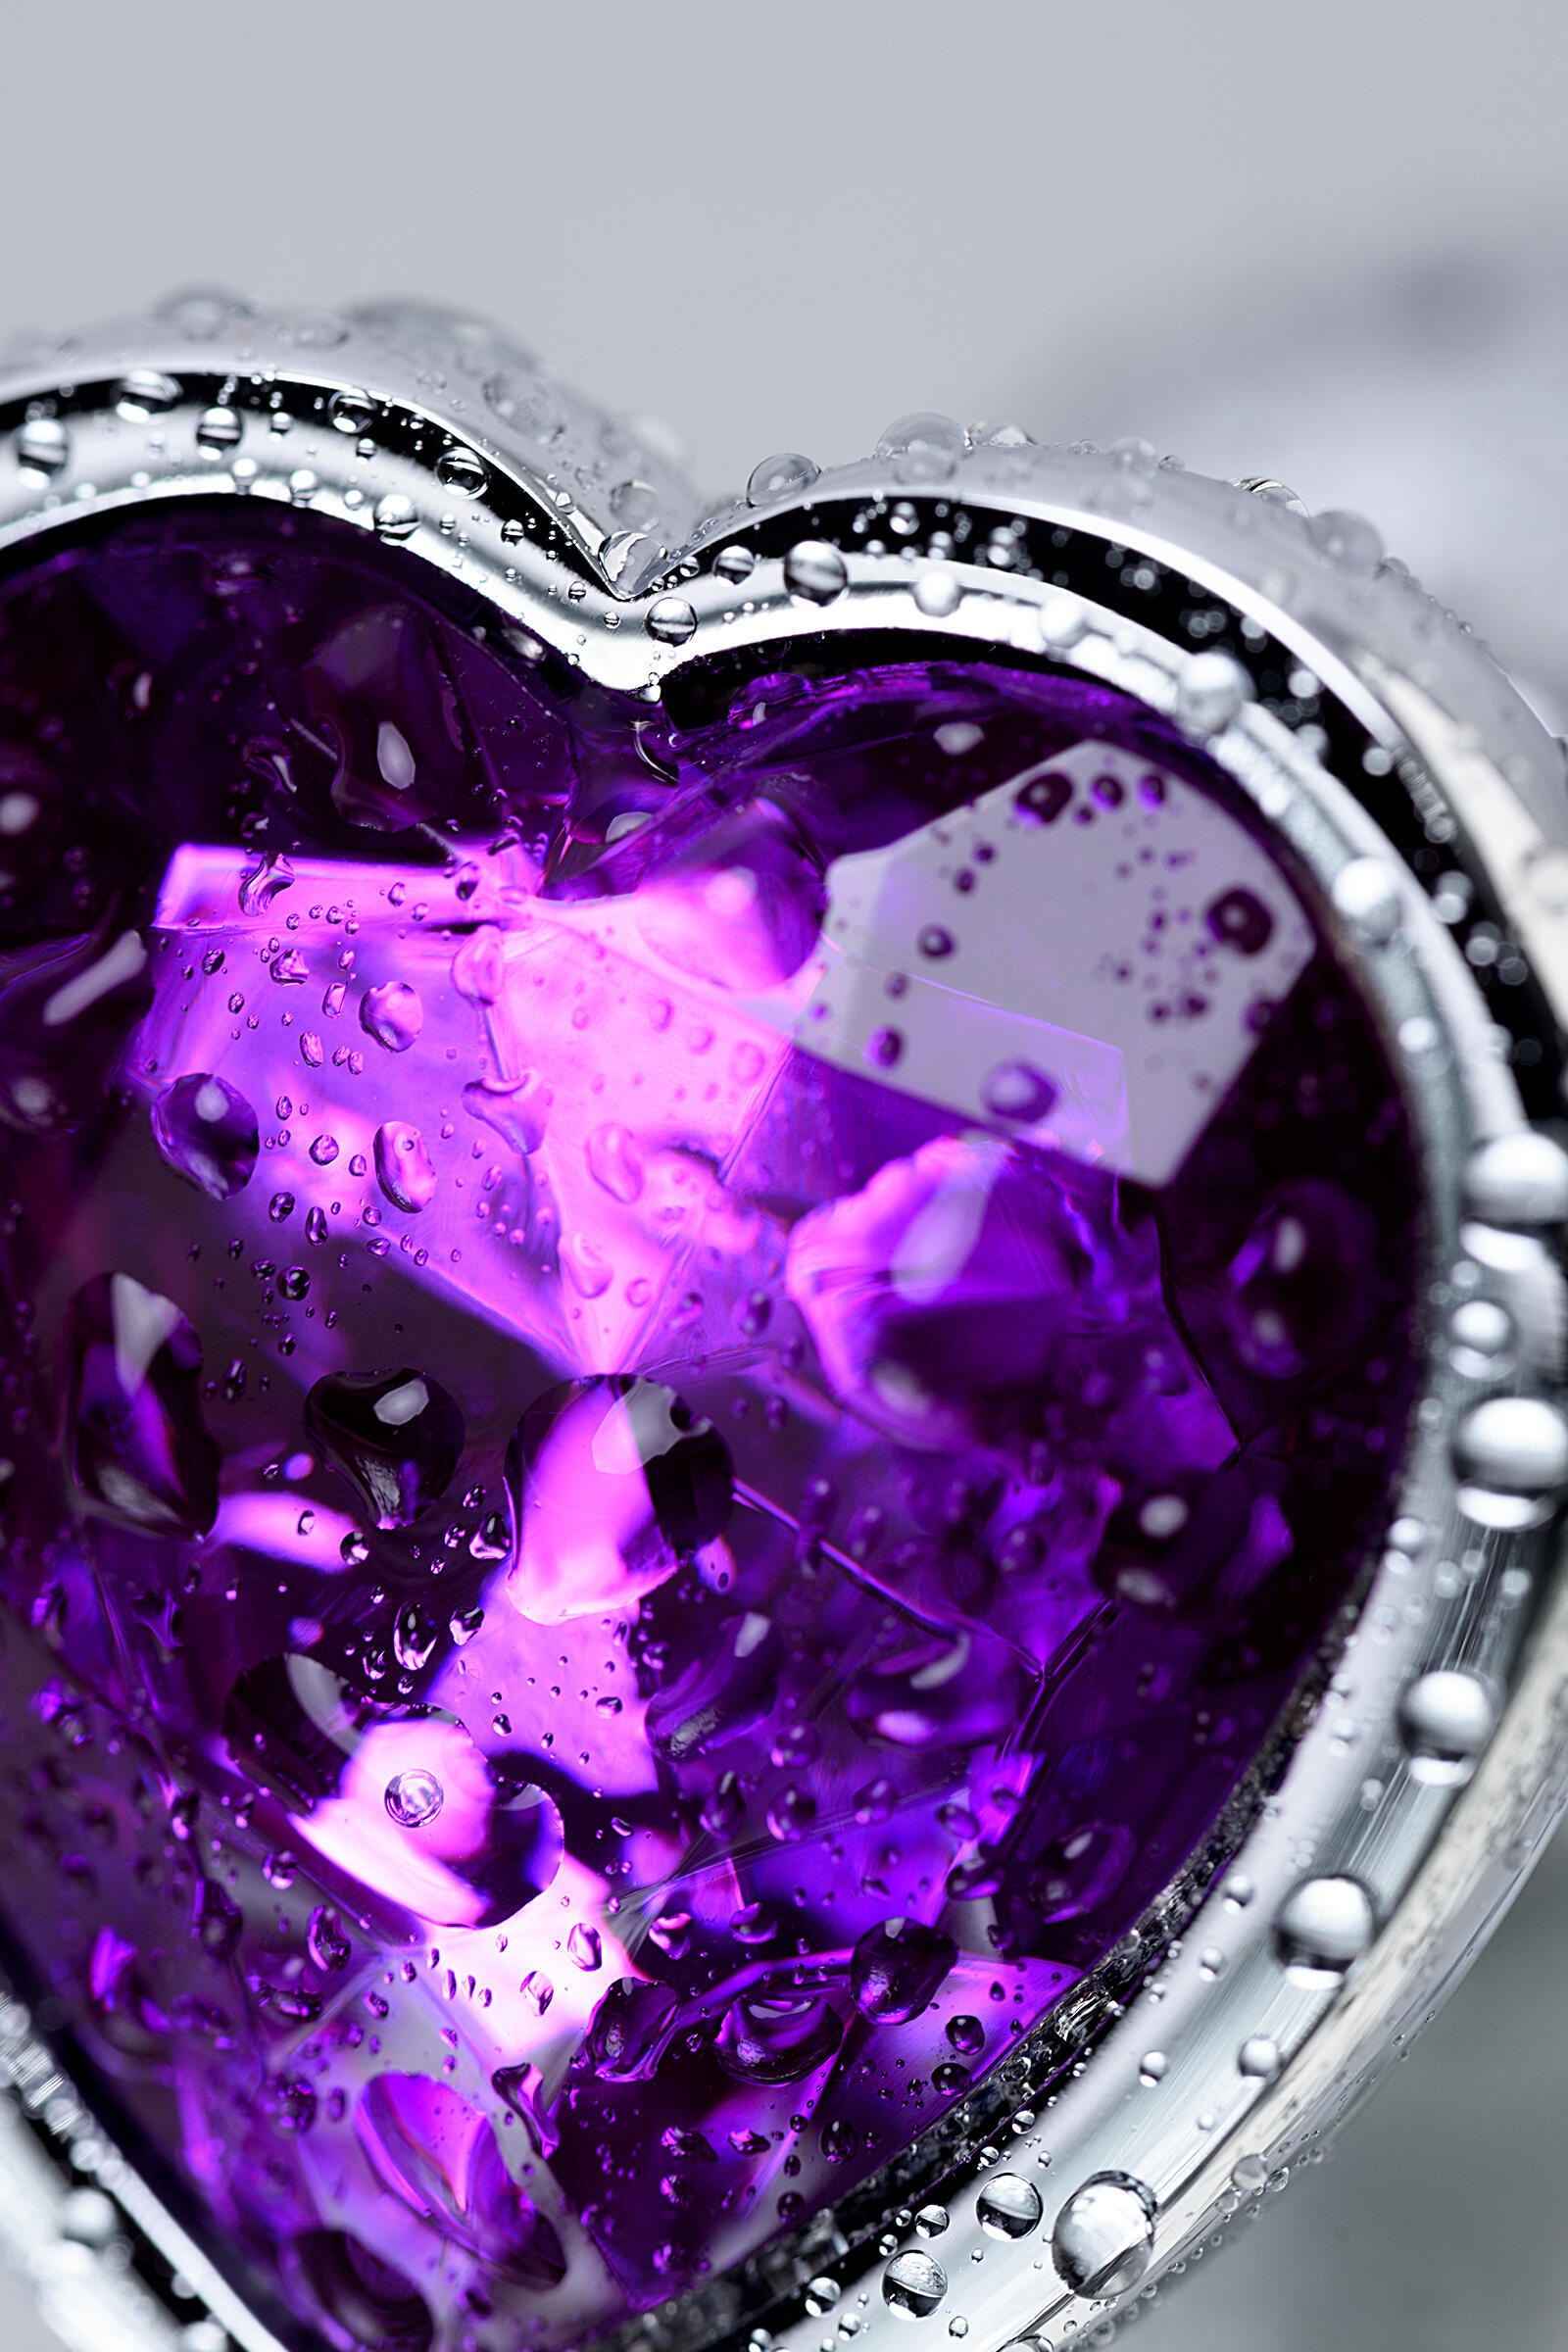 Анальная пробка Metal by Toyfa с кристаллом-сердце цвета аметист, серебристая